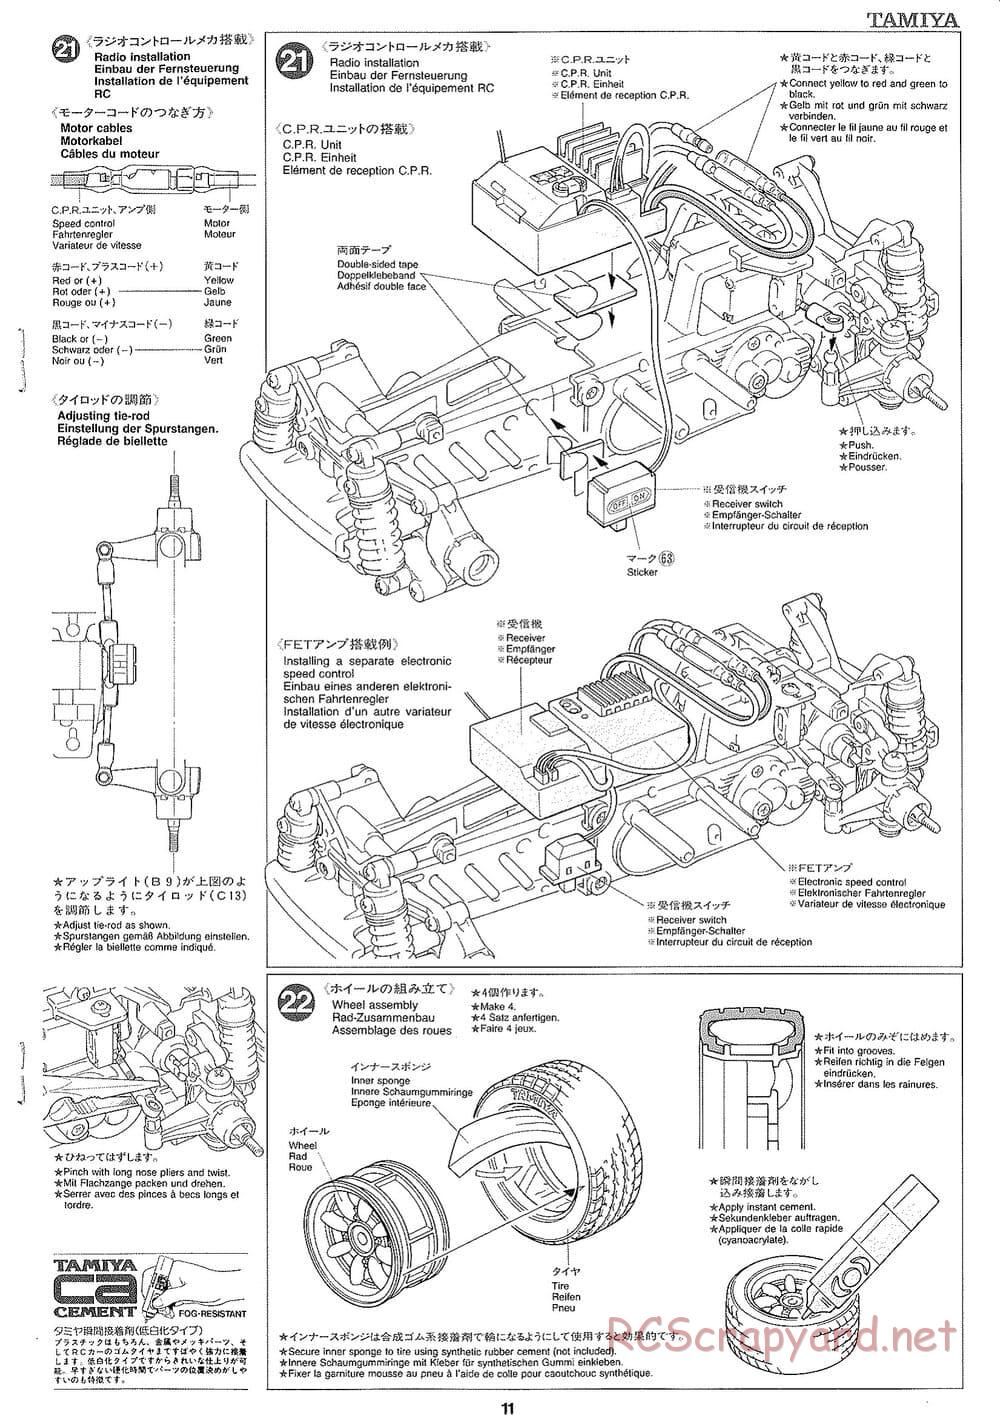 Tamiya - Rover Mini Cooper Racing - M03 Chassis - Manual - Page 11